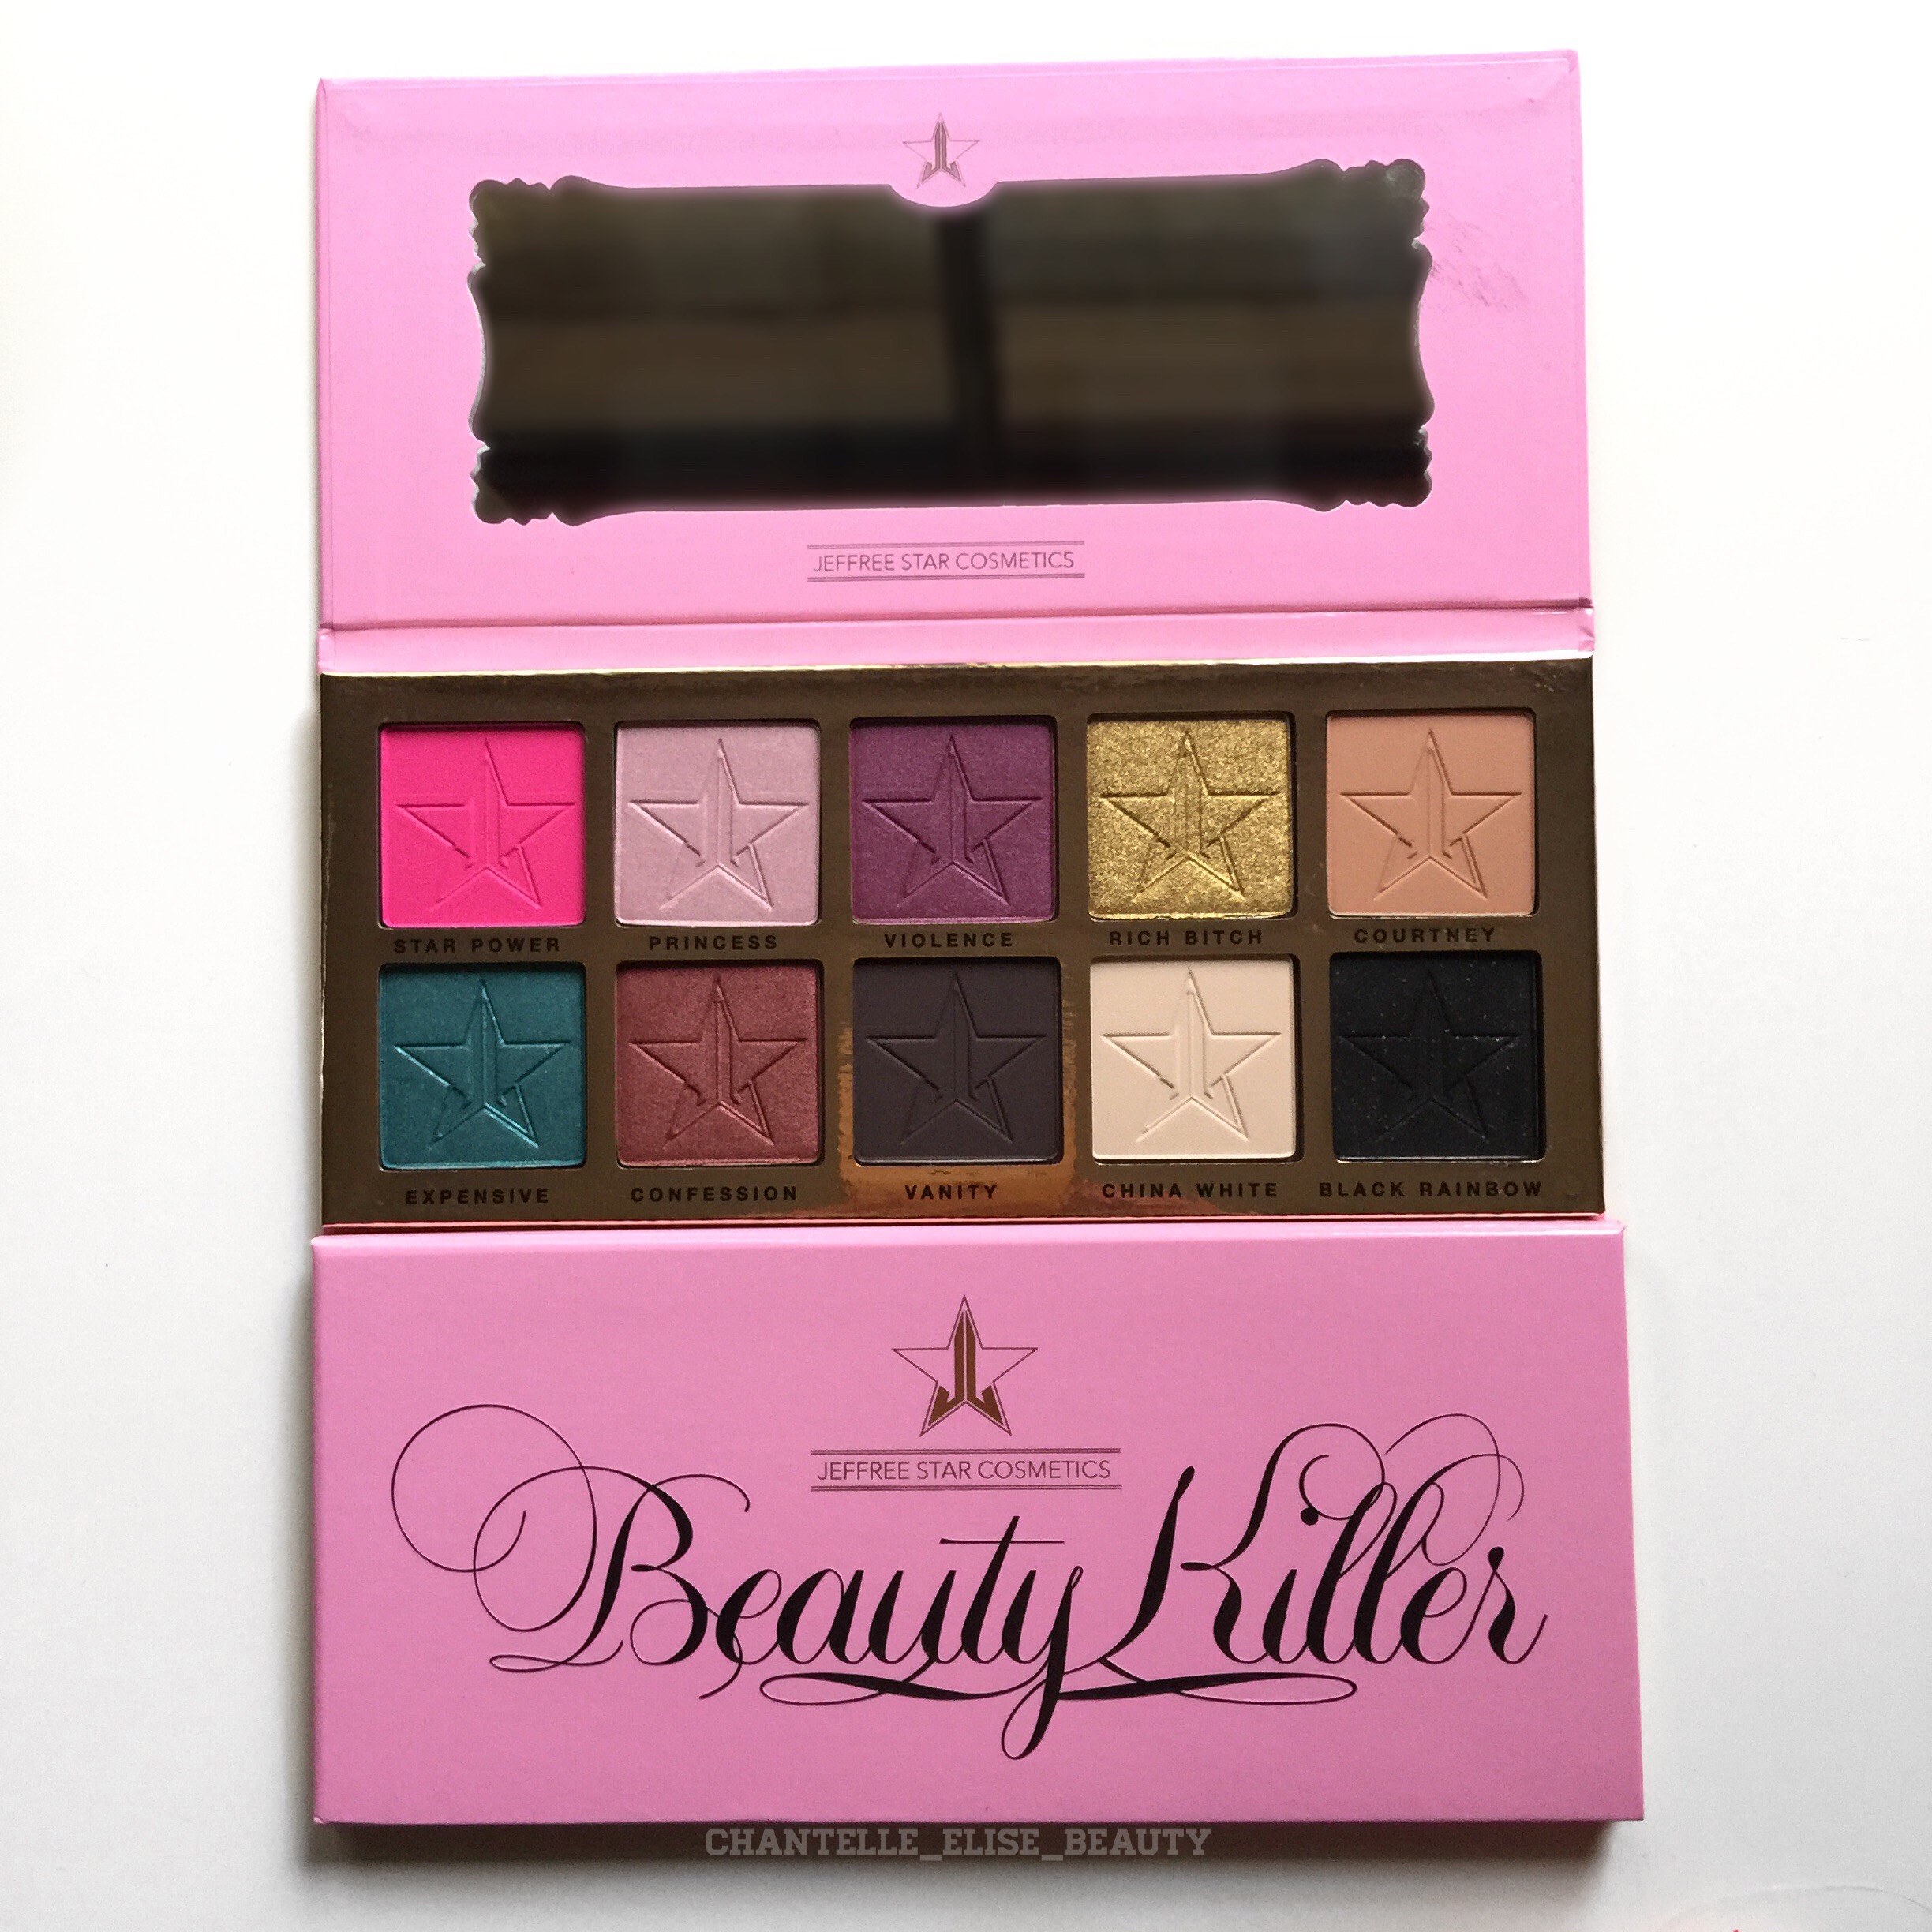 First Impressions – Jeffree Star Cosmetics Beauty Killer eyeshadow palette ...